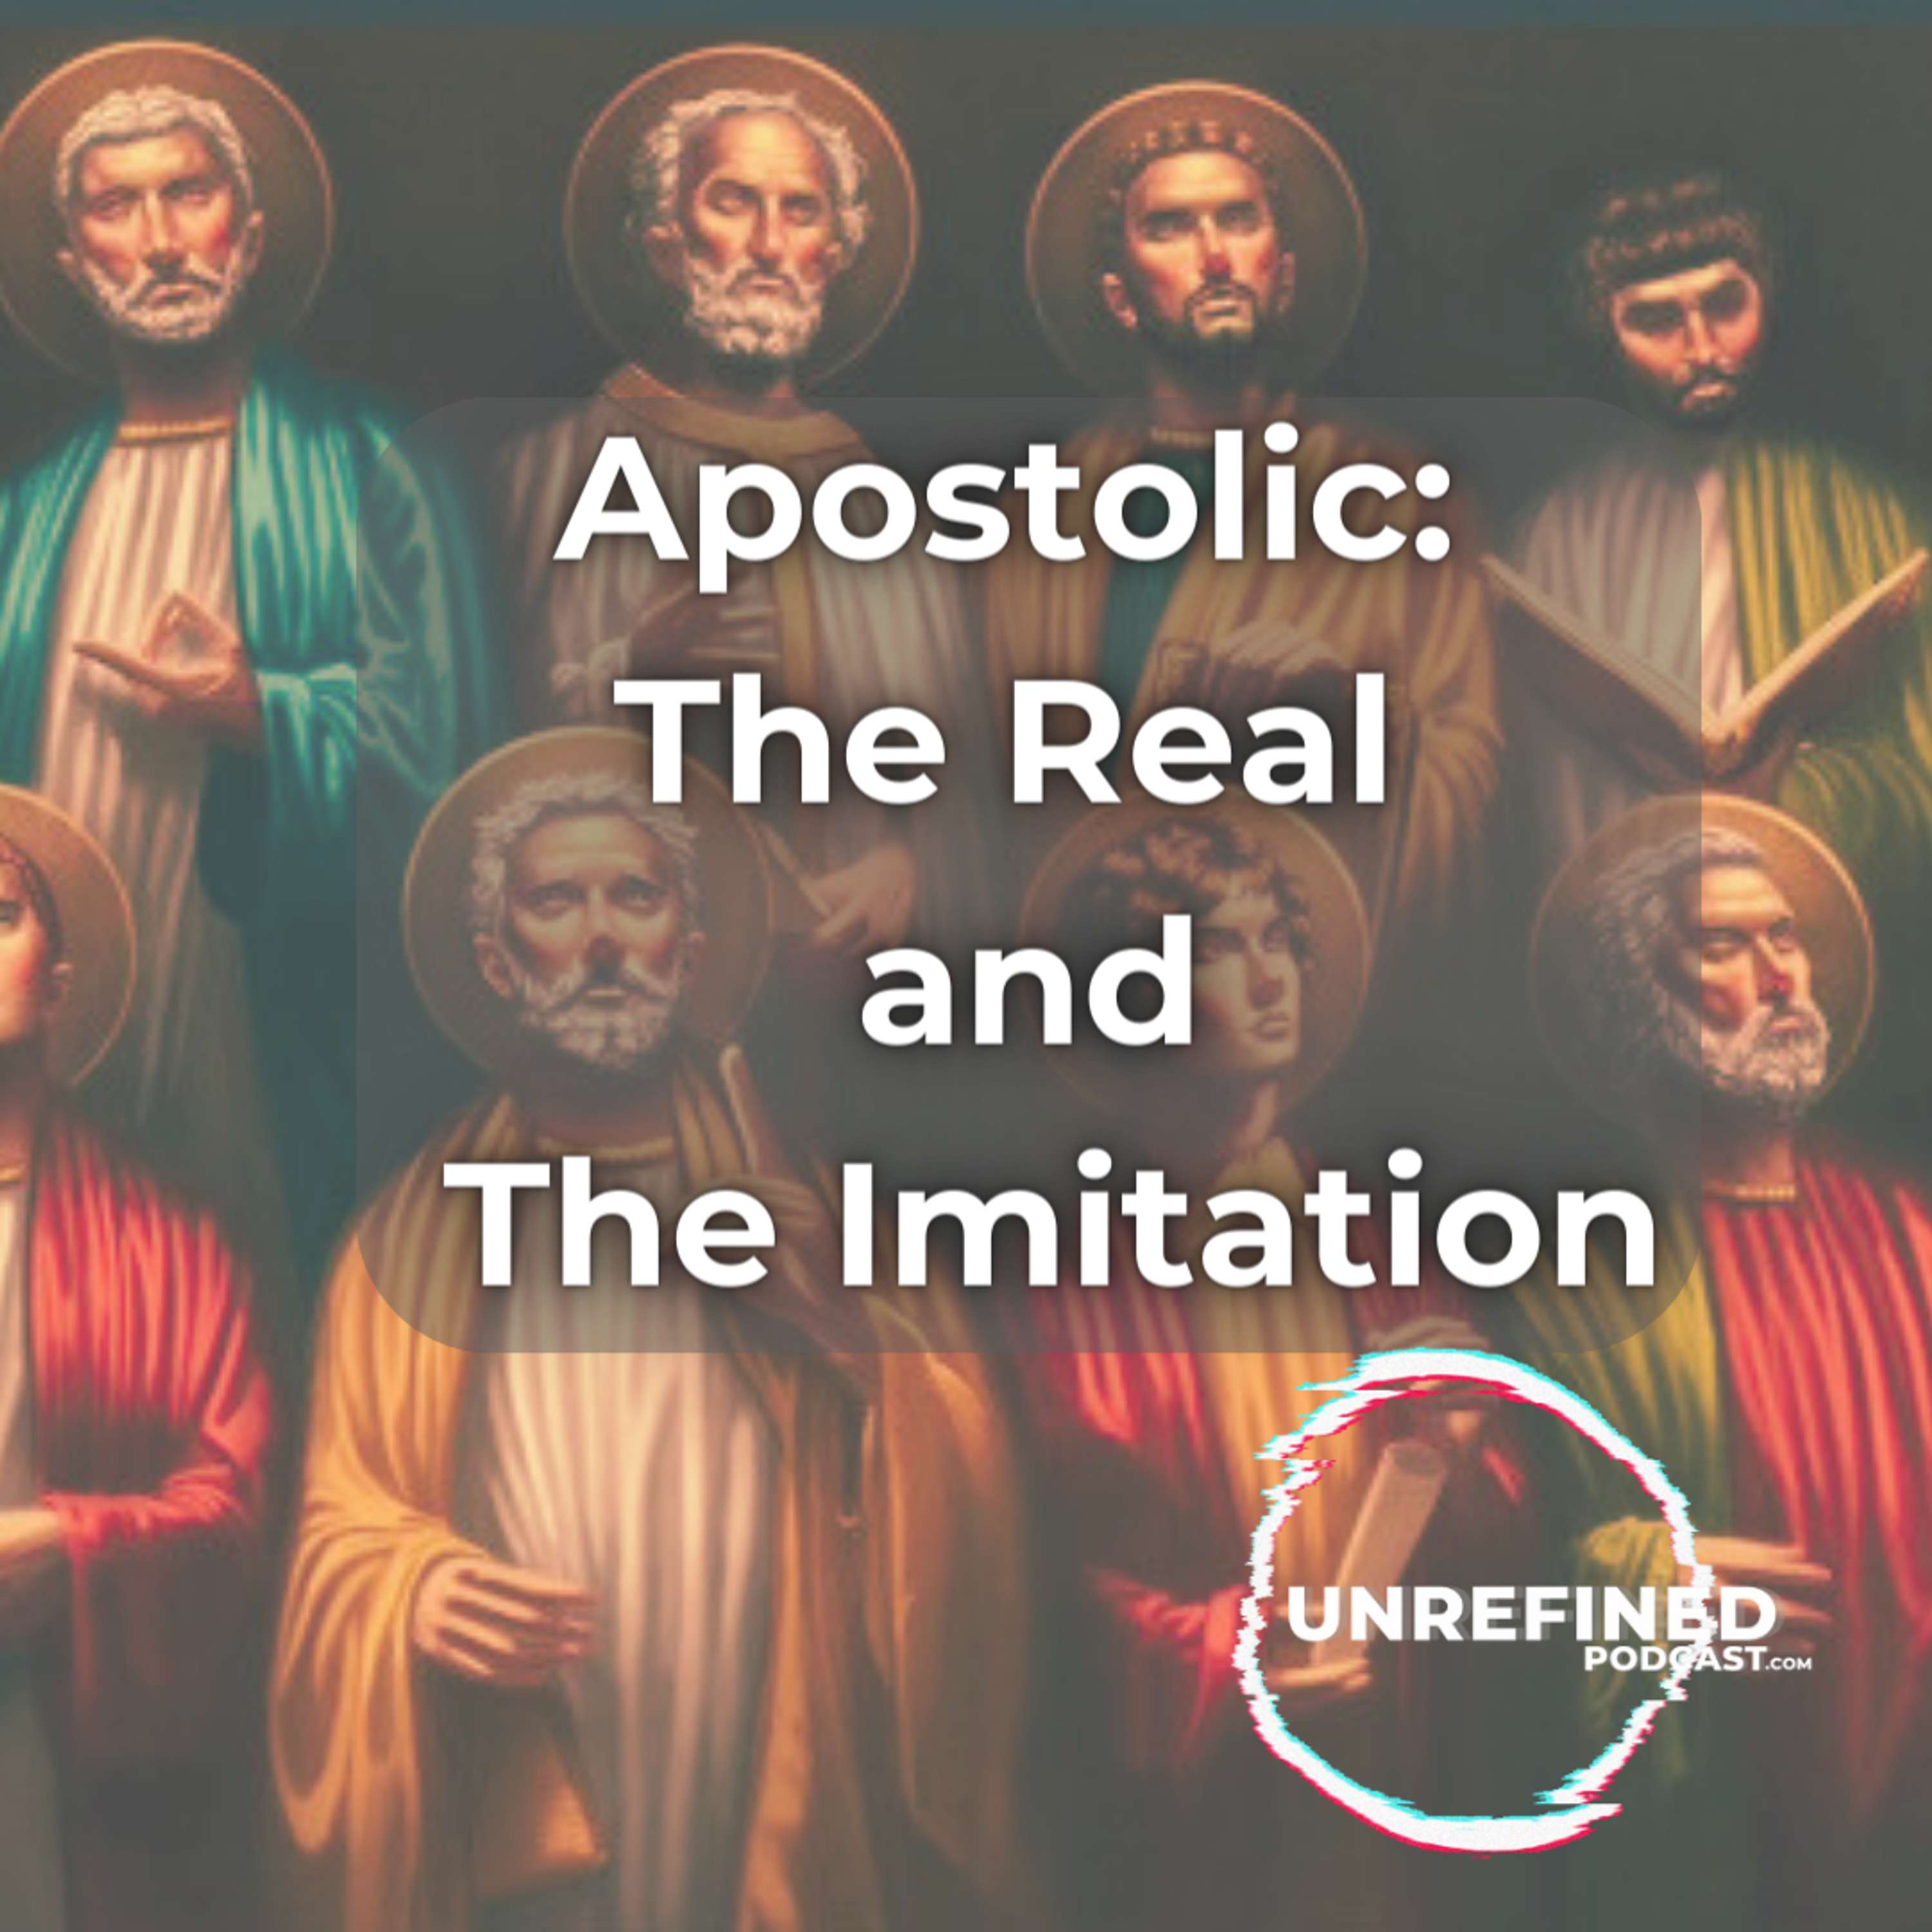 Apostolic: The Real and The Imitation